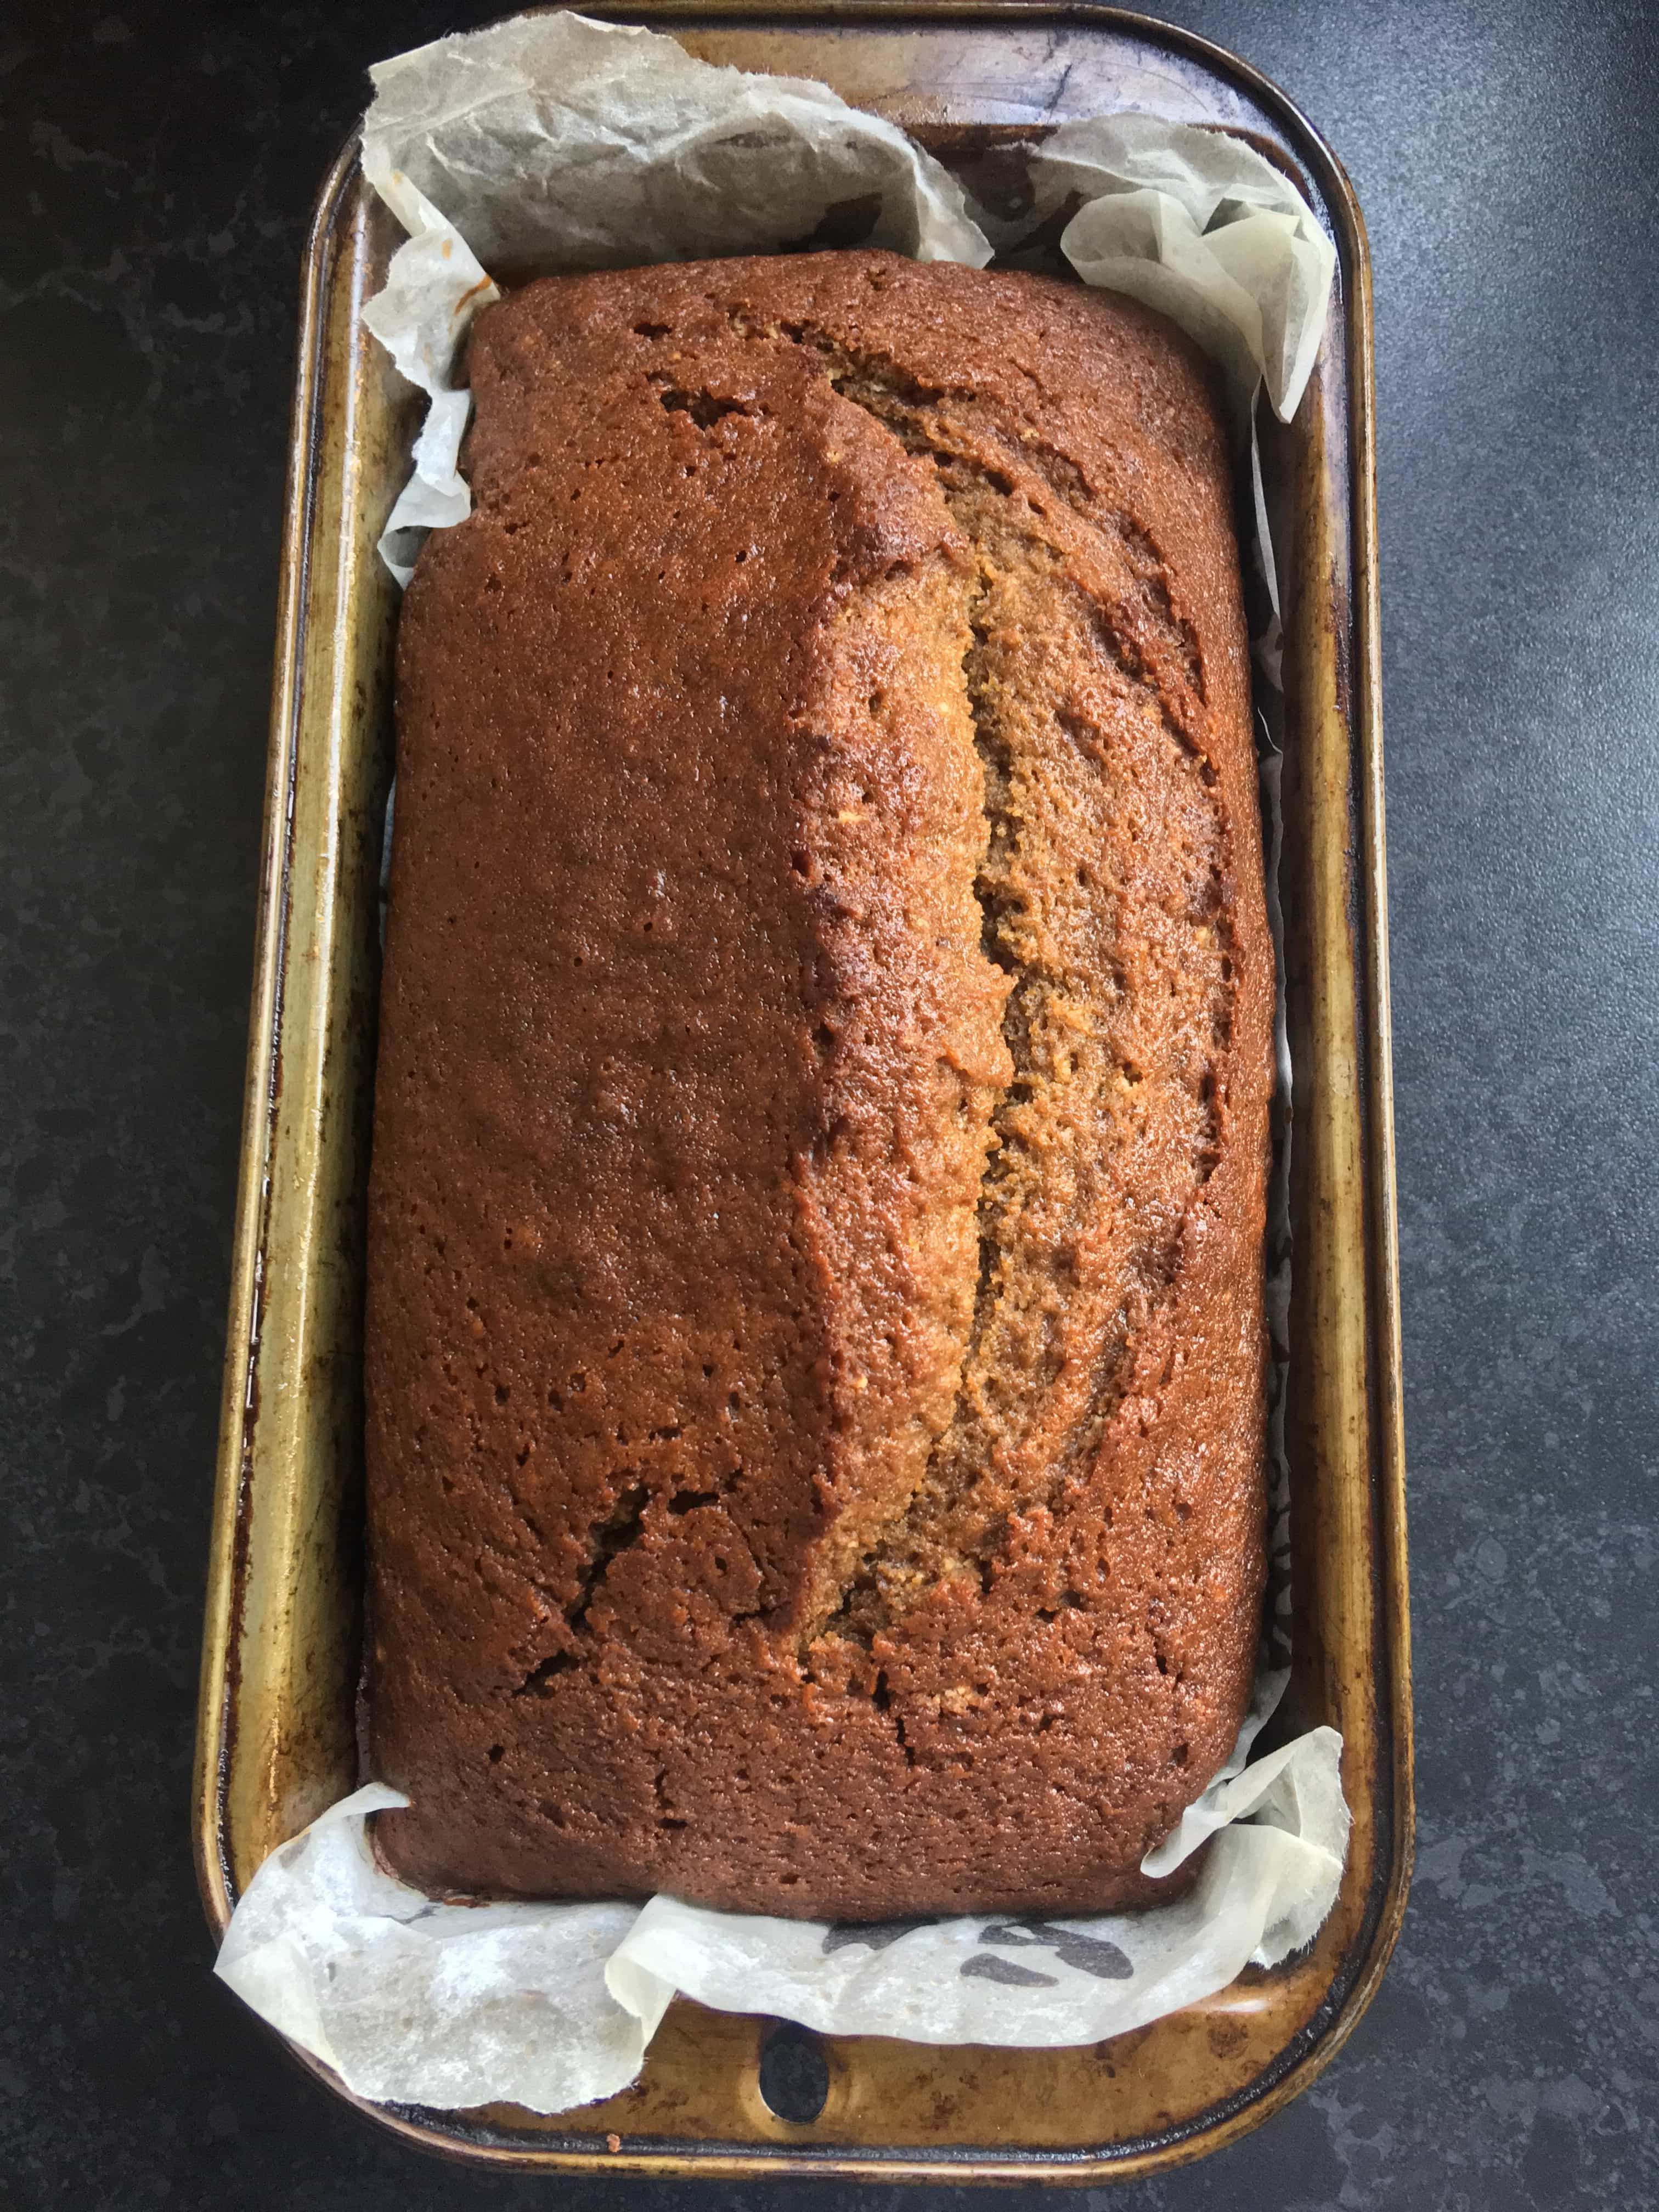 A freshly baked gingerbread loaf cake in a loaf tin on a dark background.